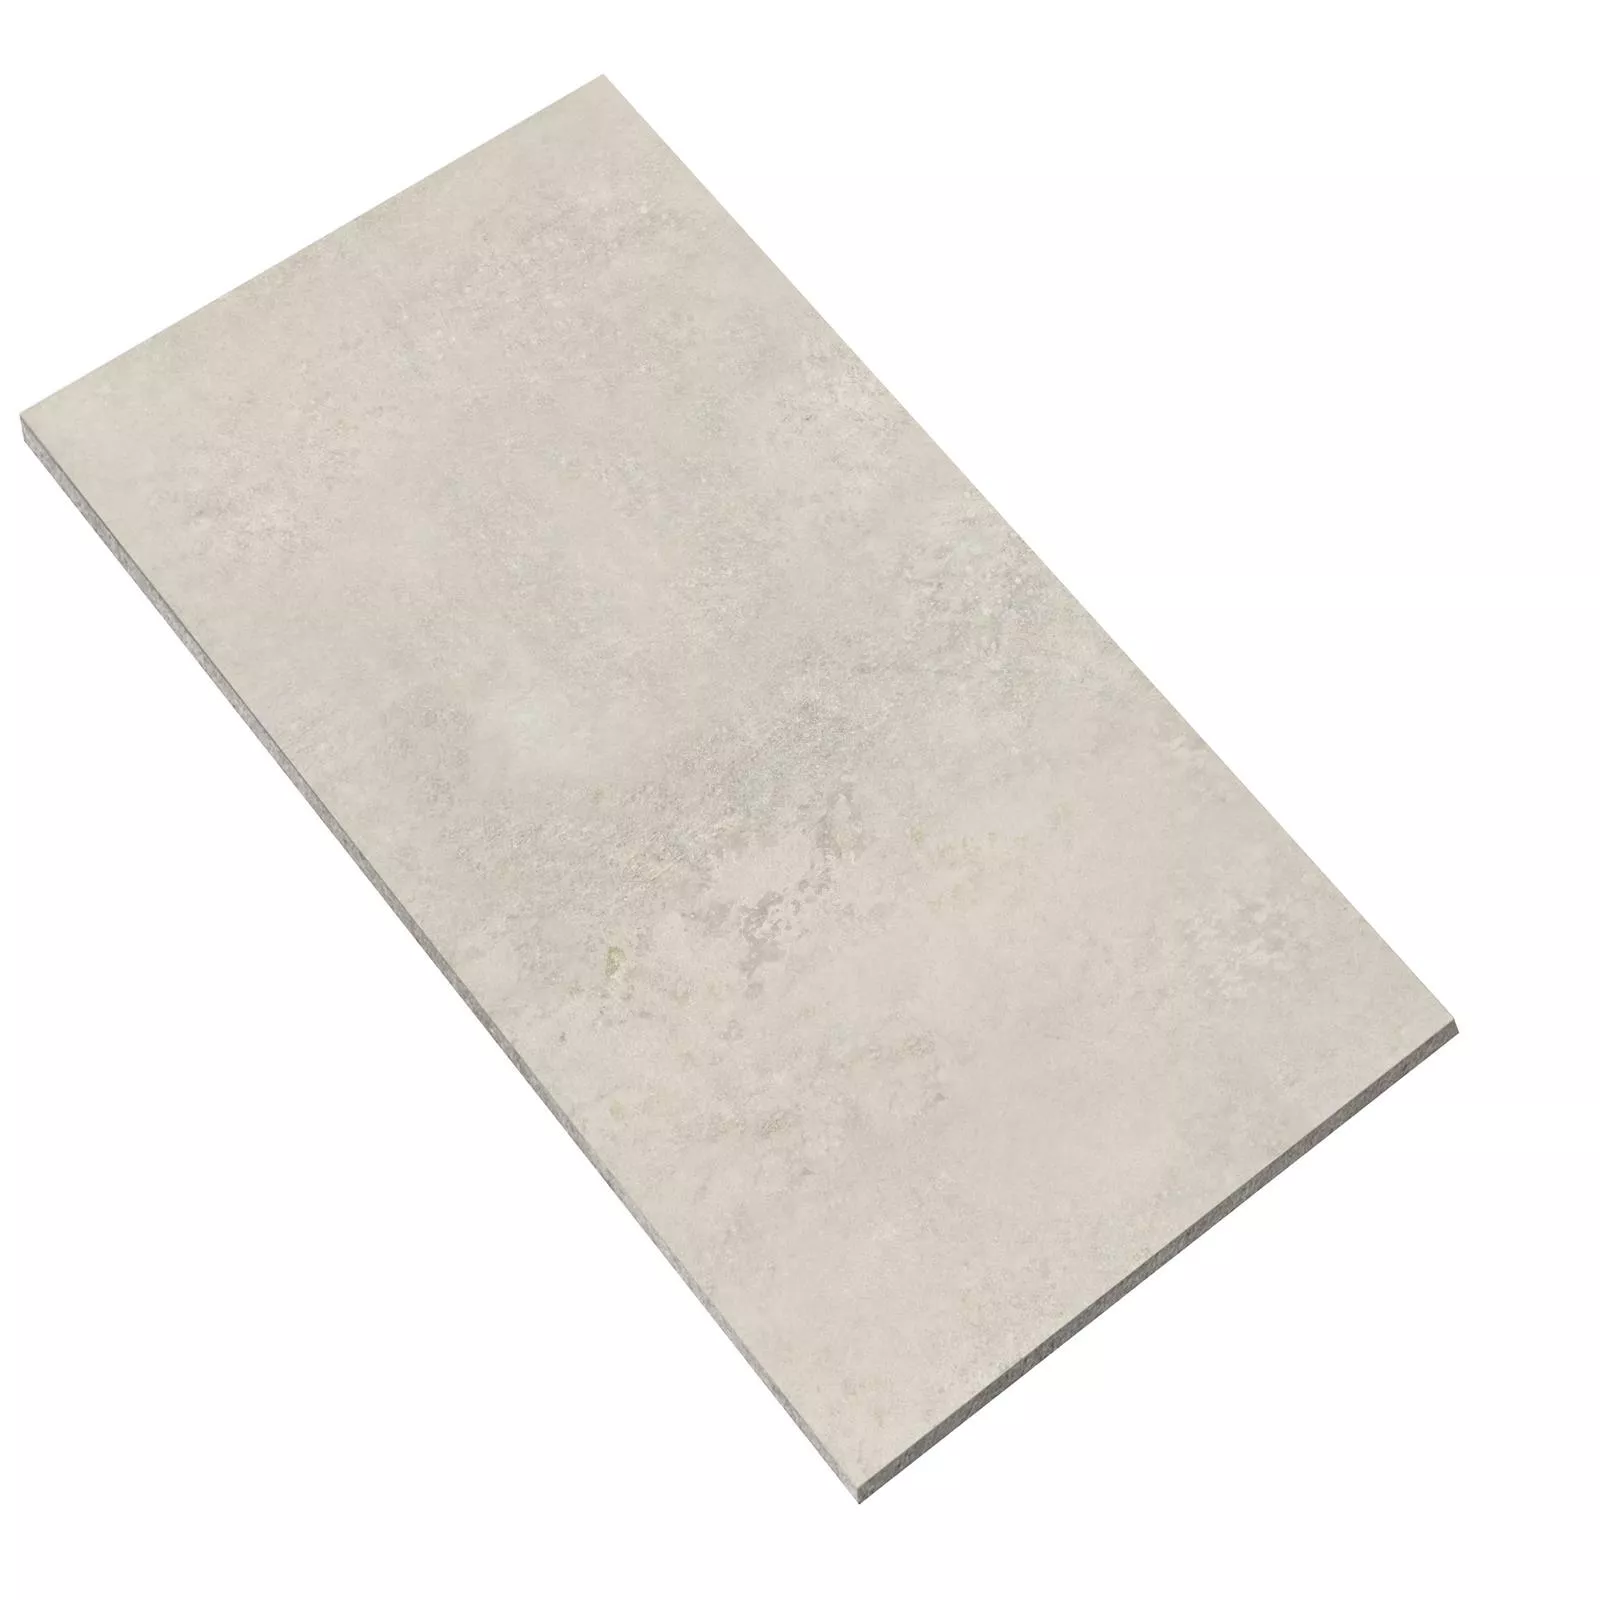 Sample Floor Tiles Peaceway Ivory 30x60cm